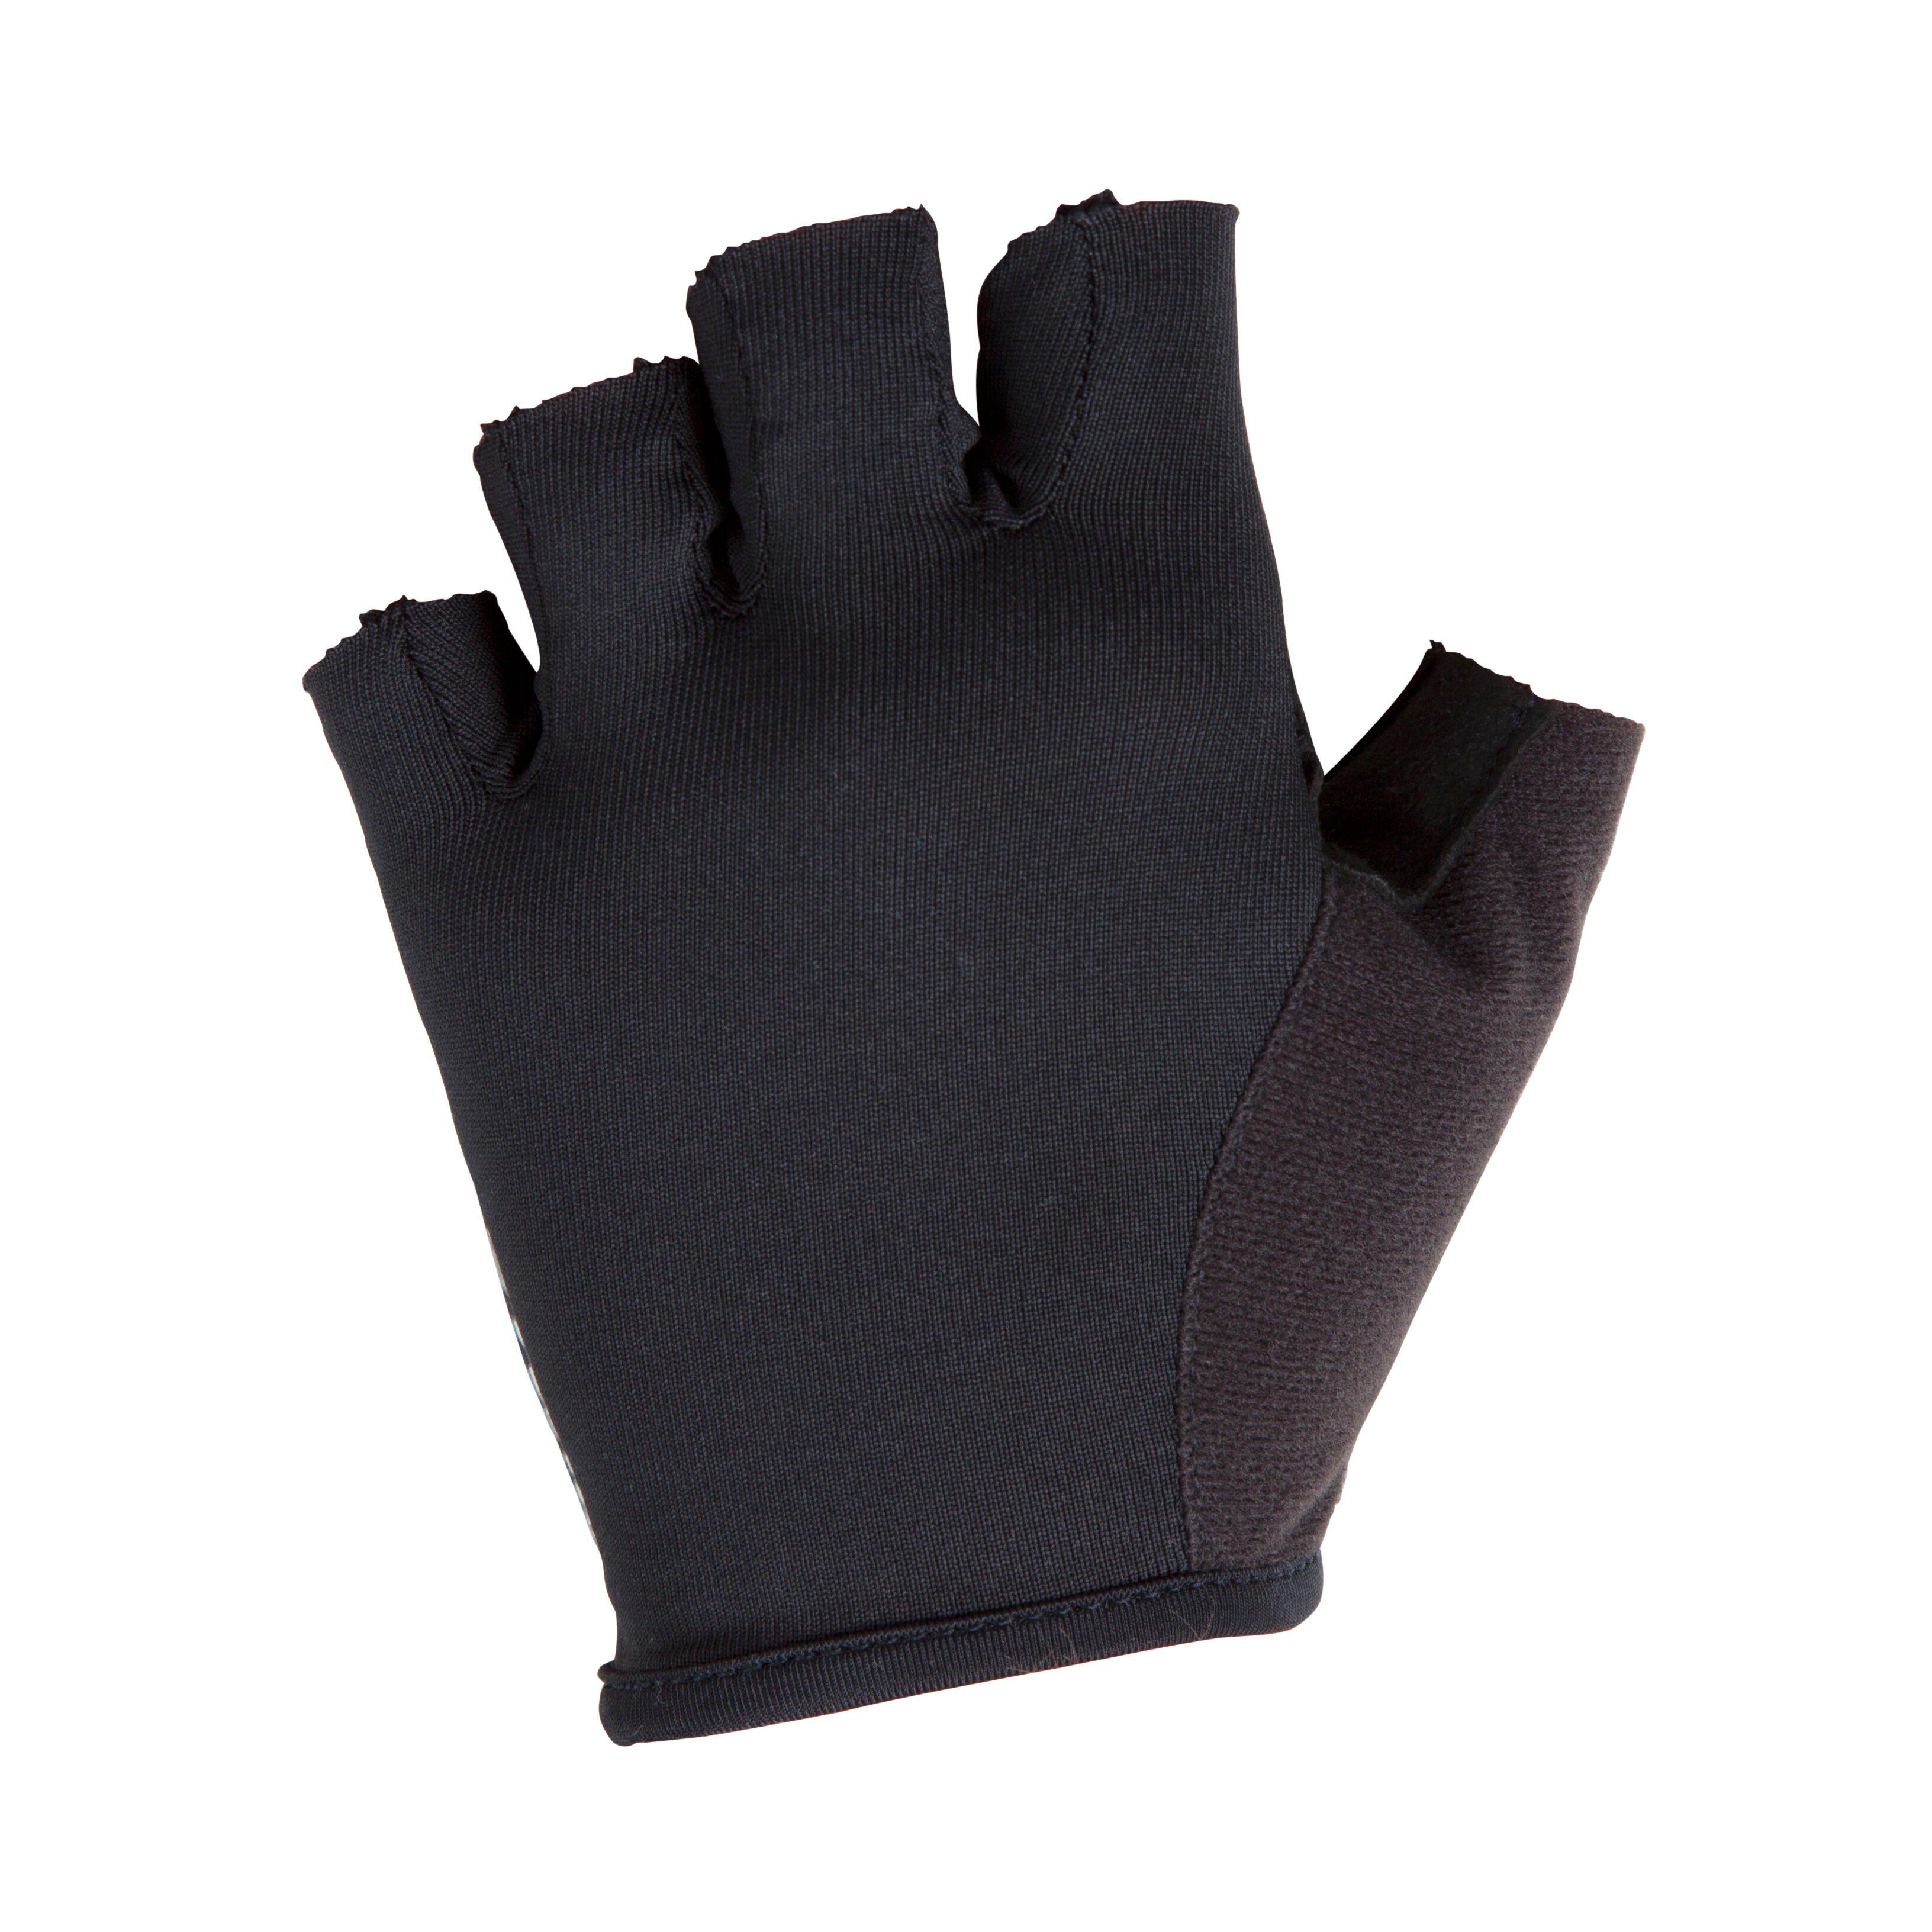 Decathlon 100 Fingerless Cycling Gloves